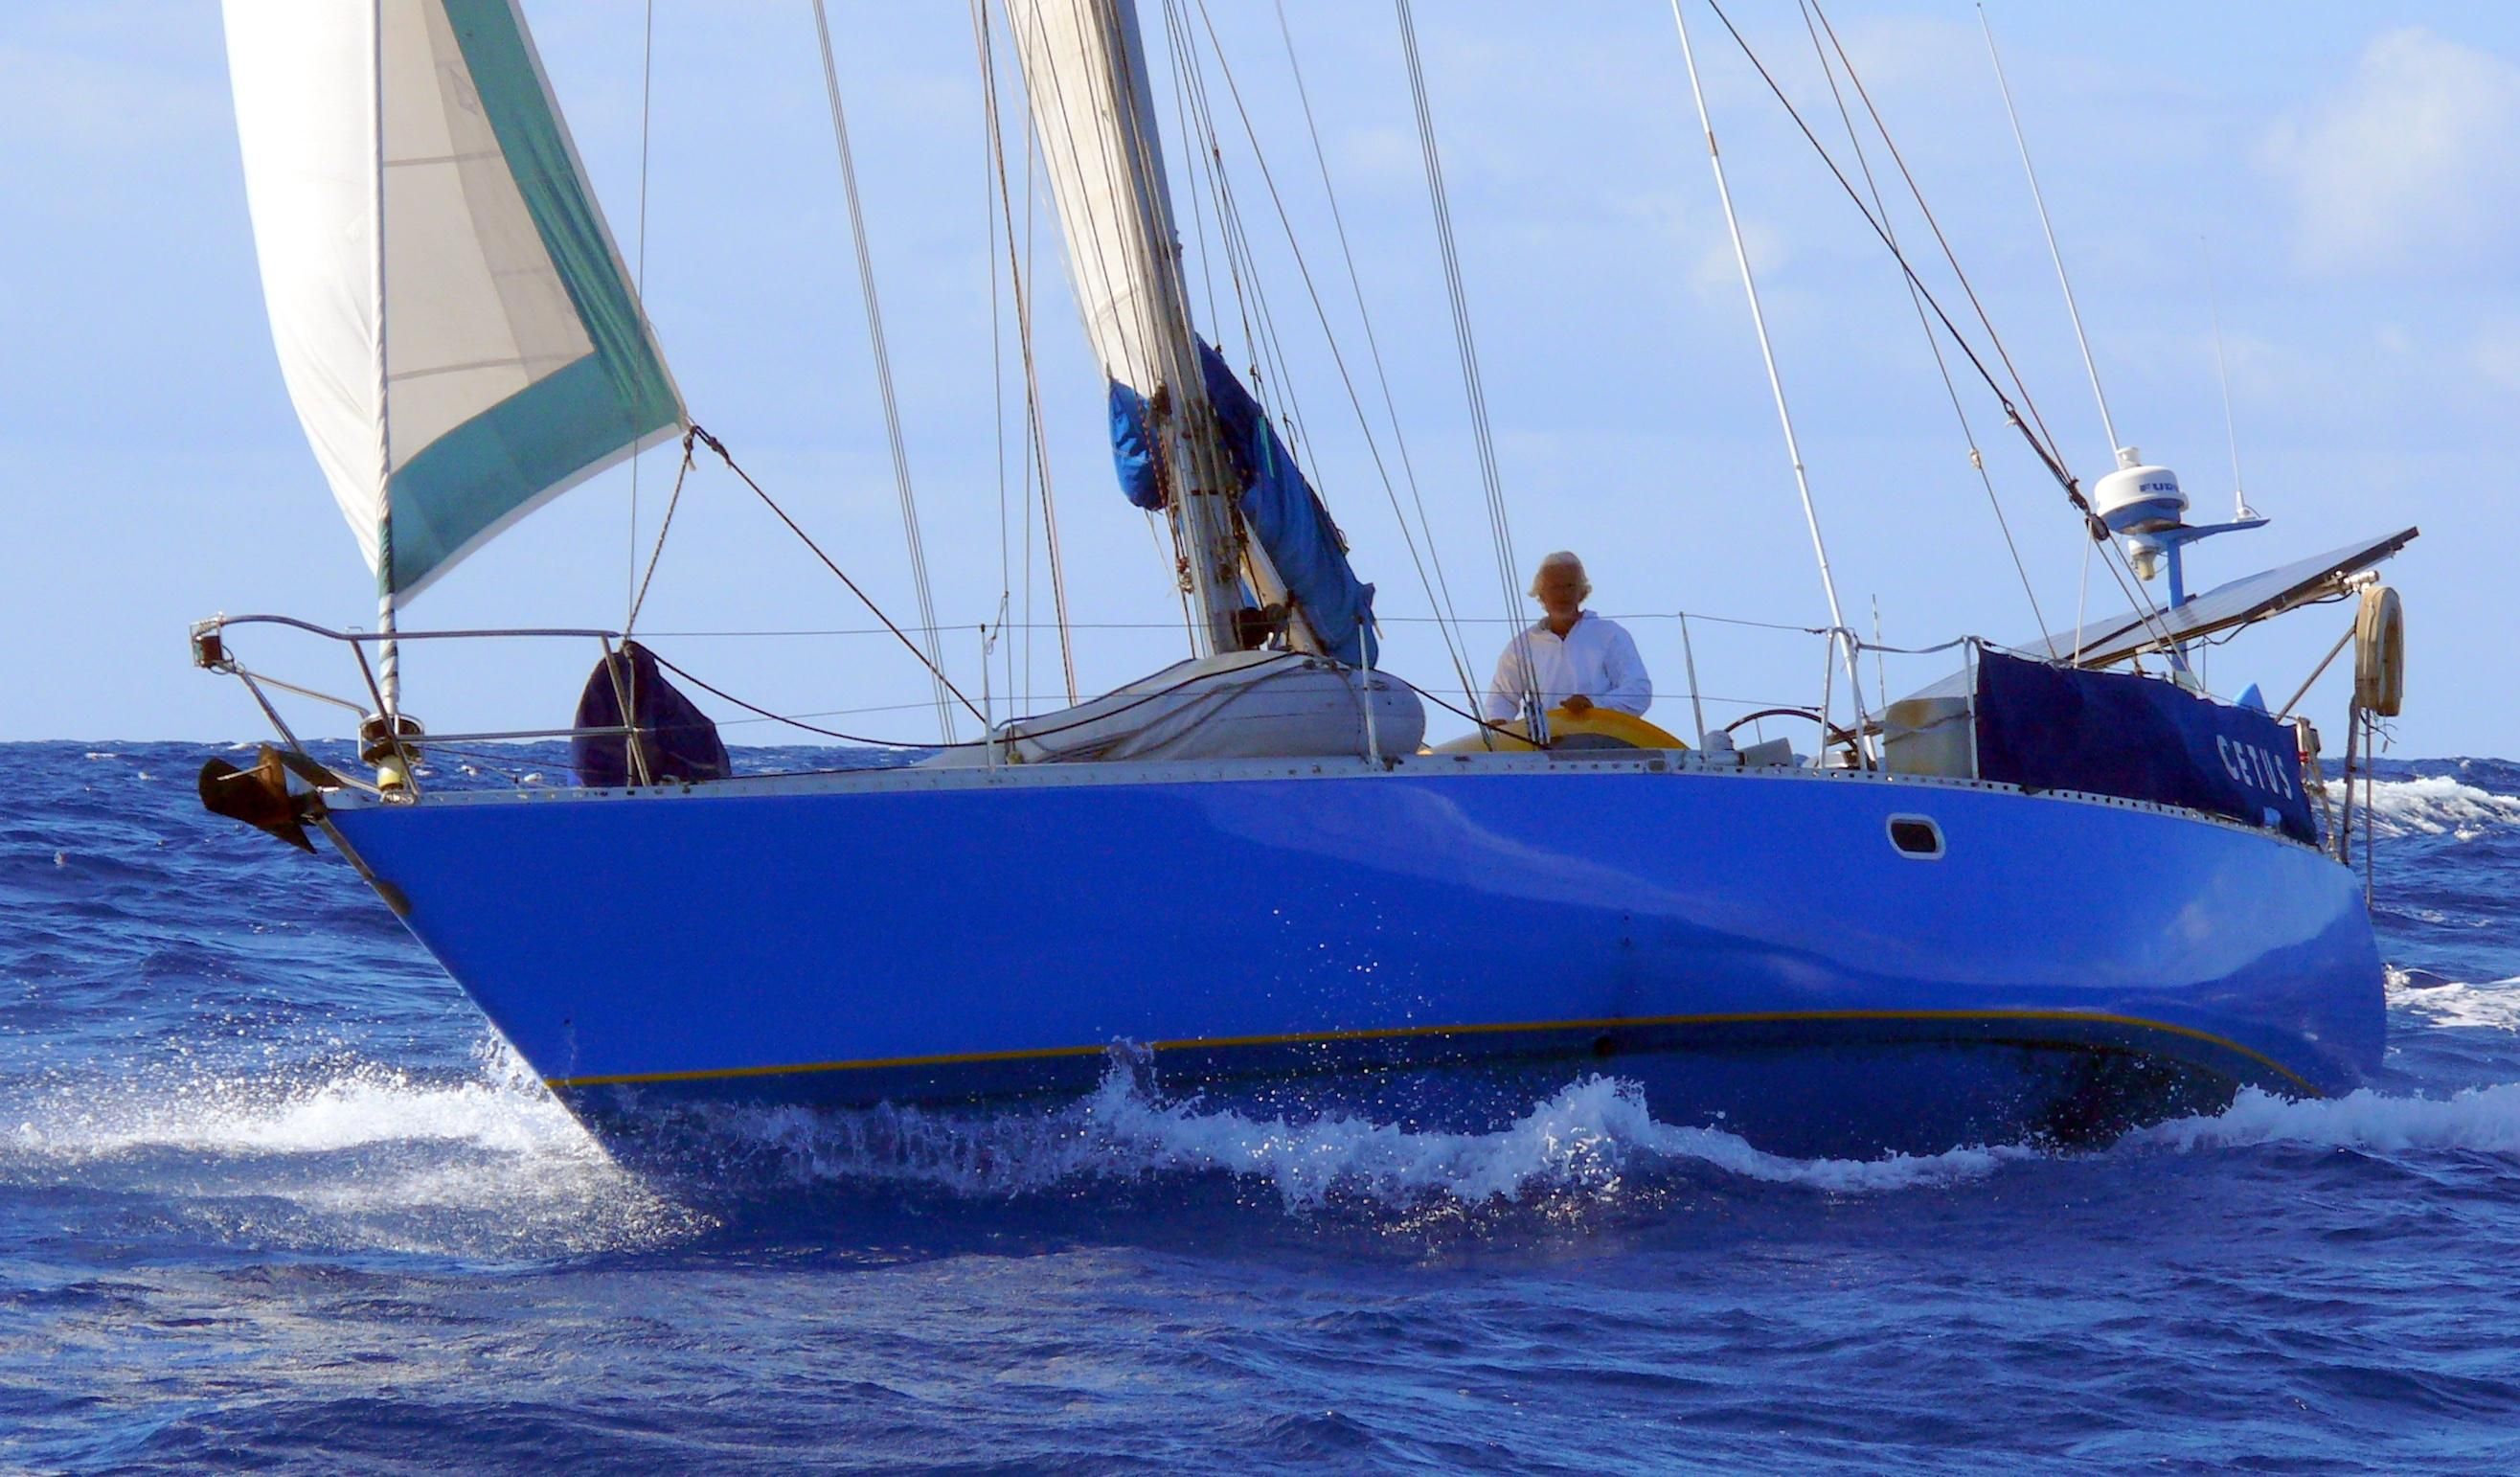 ocean racing sailboats for sale